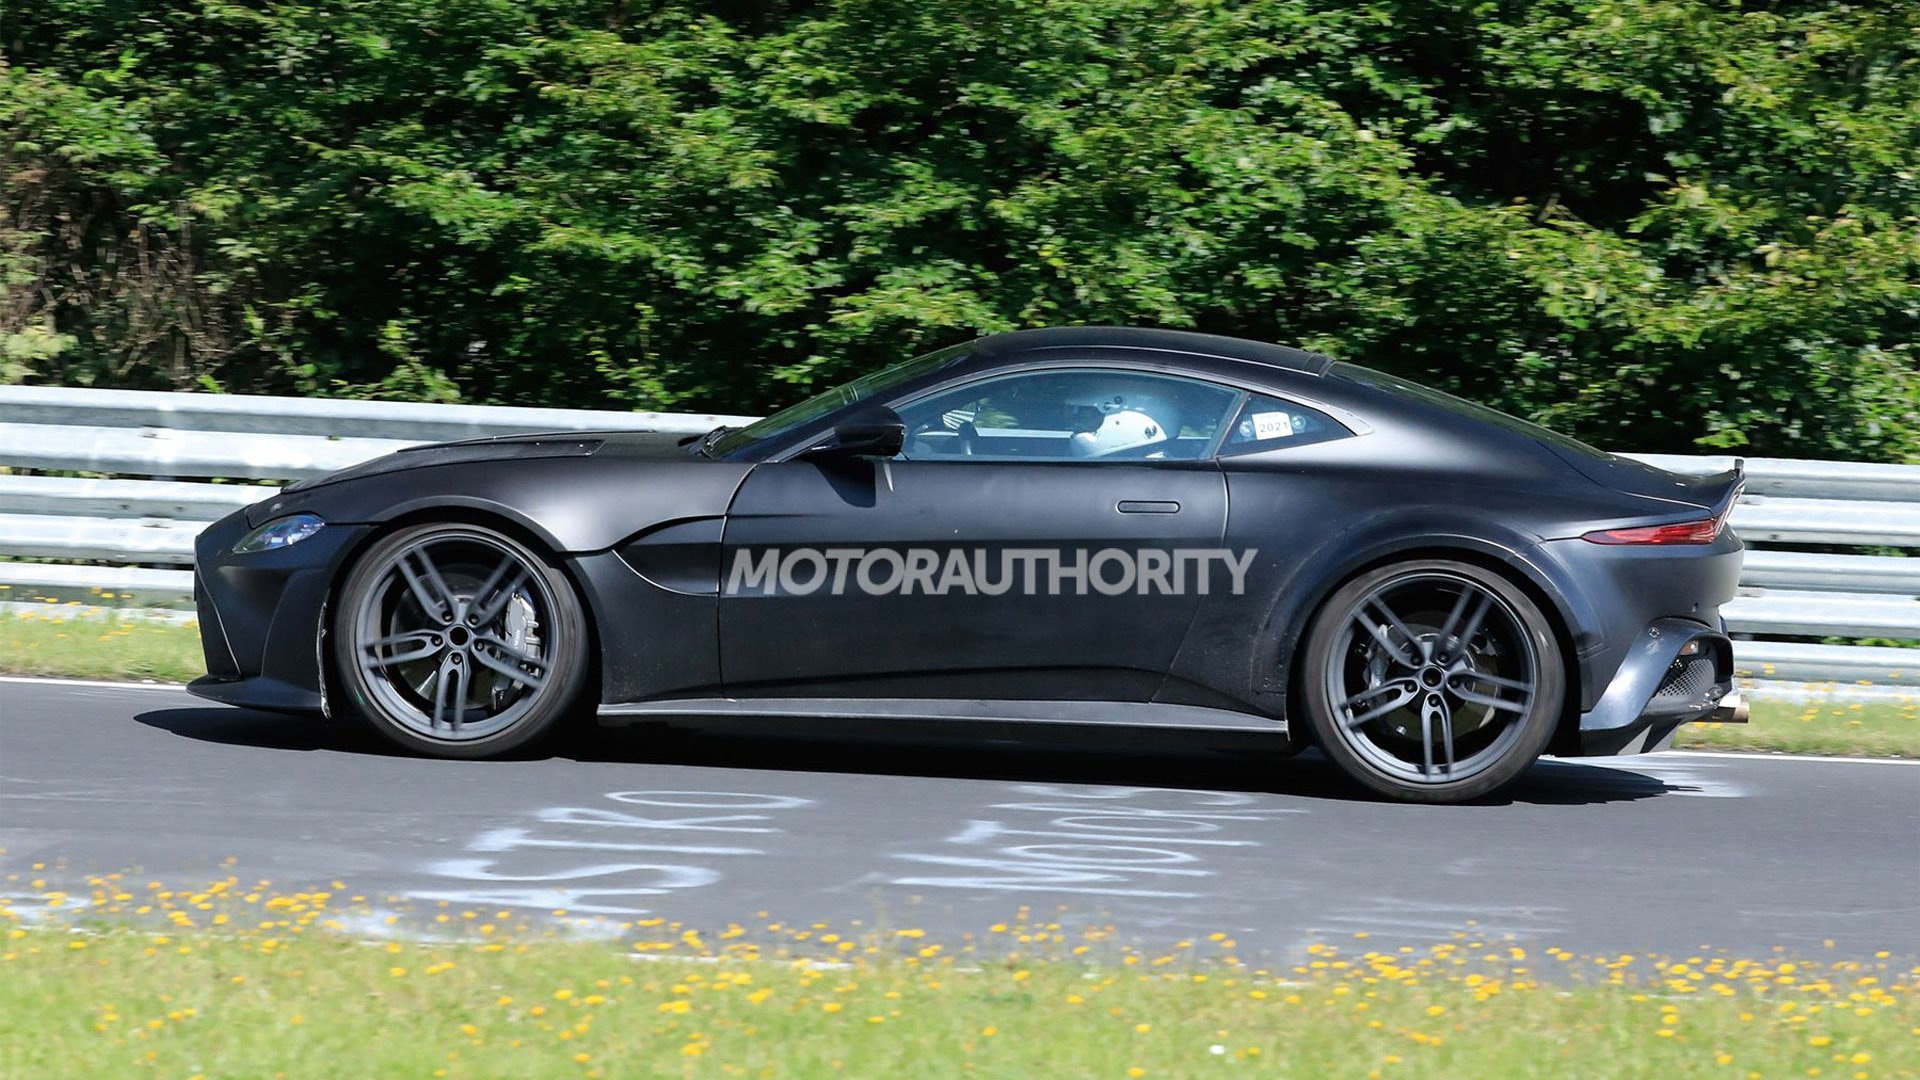 2023 Aston Martin V12 Vantage spy shots - Photo credit: S. Baldauf/SB-Medien